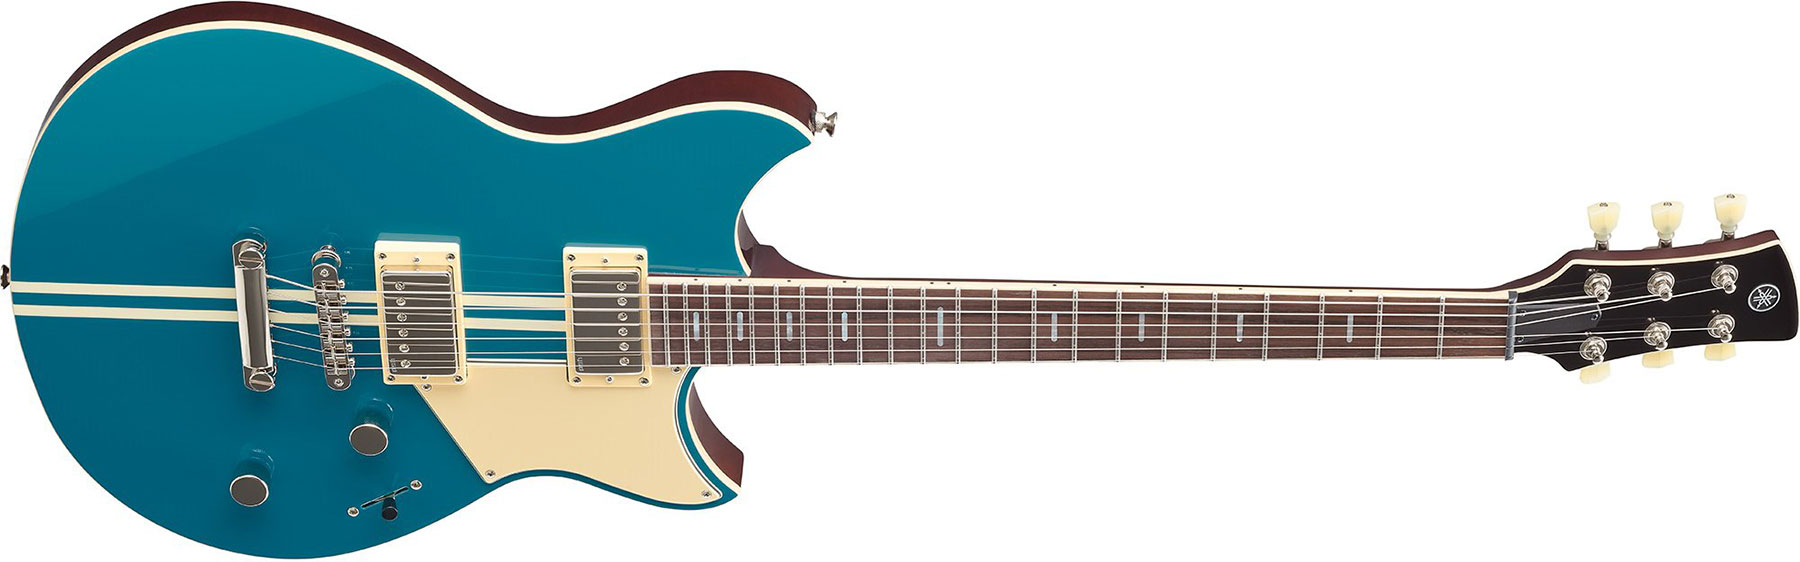 Yamaha Rss20 Revstar Standard Hh Ht Rw - Swift Blue - Guitarra eléctrica de doble corte. - Variation 1